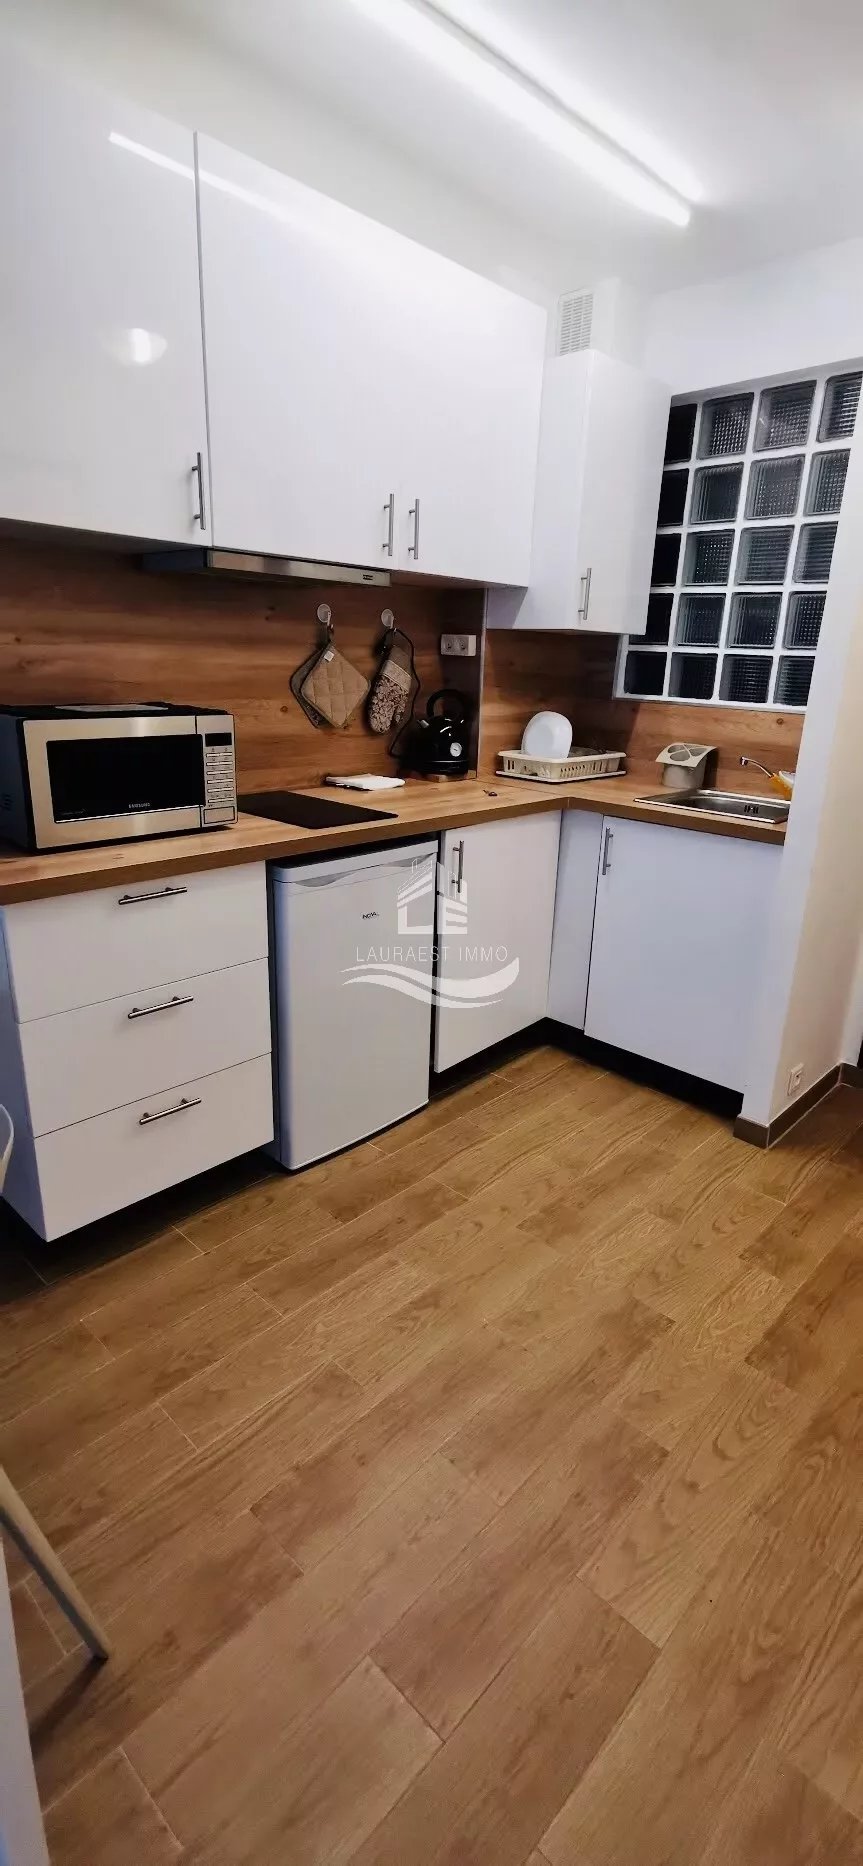 Kitchen Wooden floor